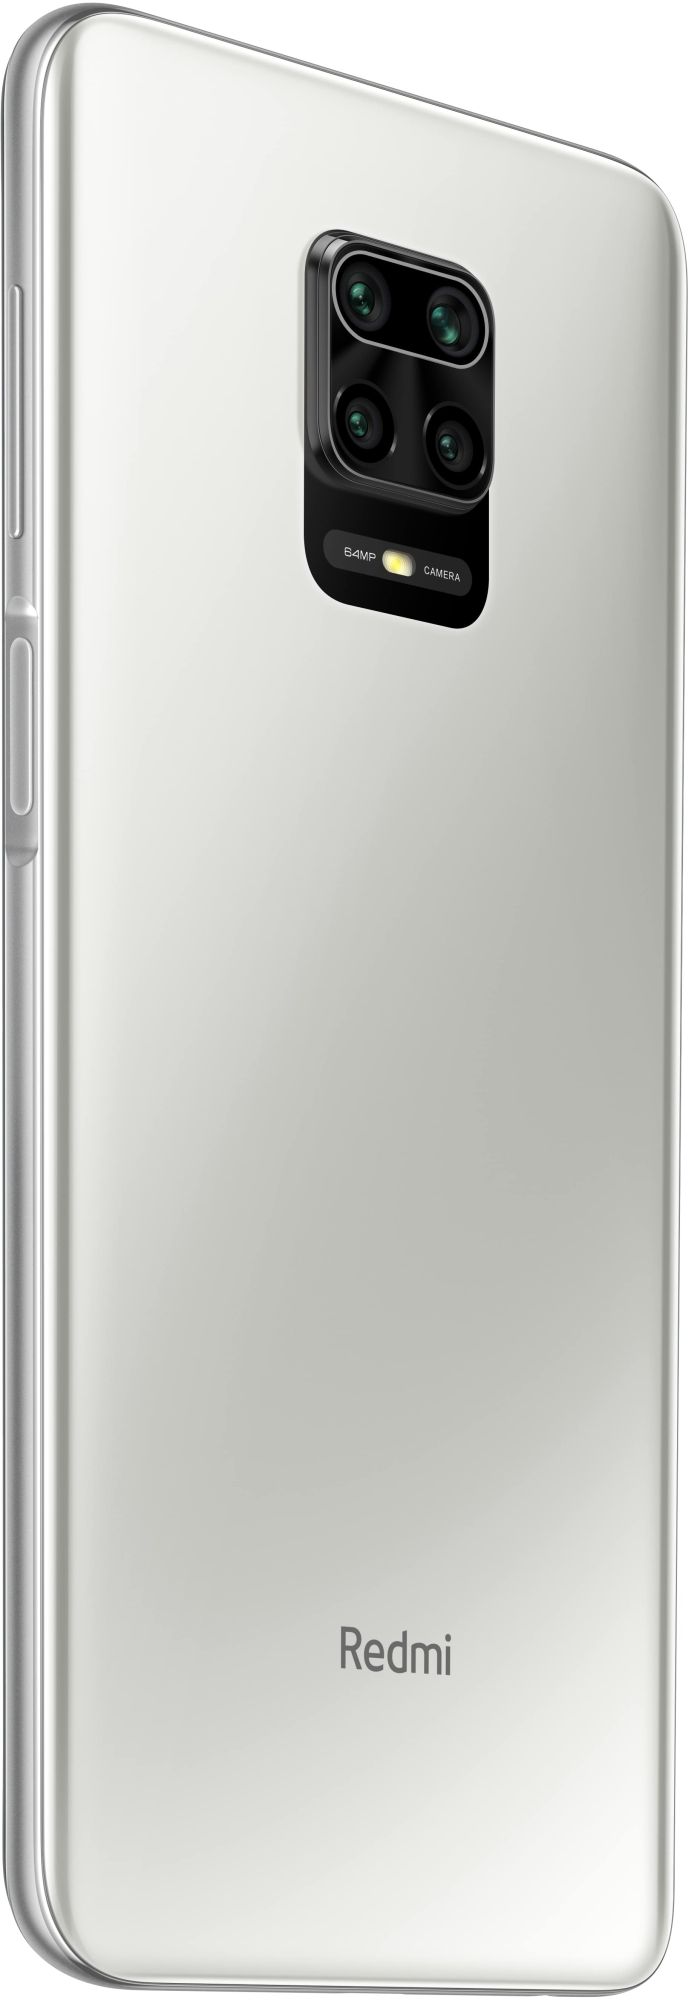 Xiaomi Redmi Note 9 Pro 64GB White